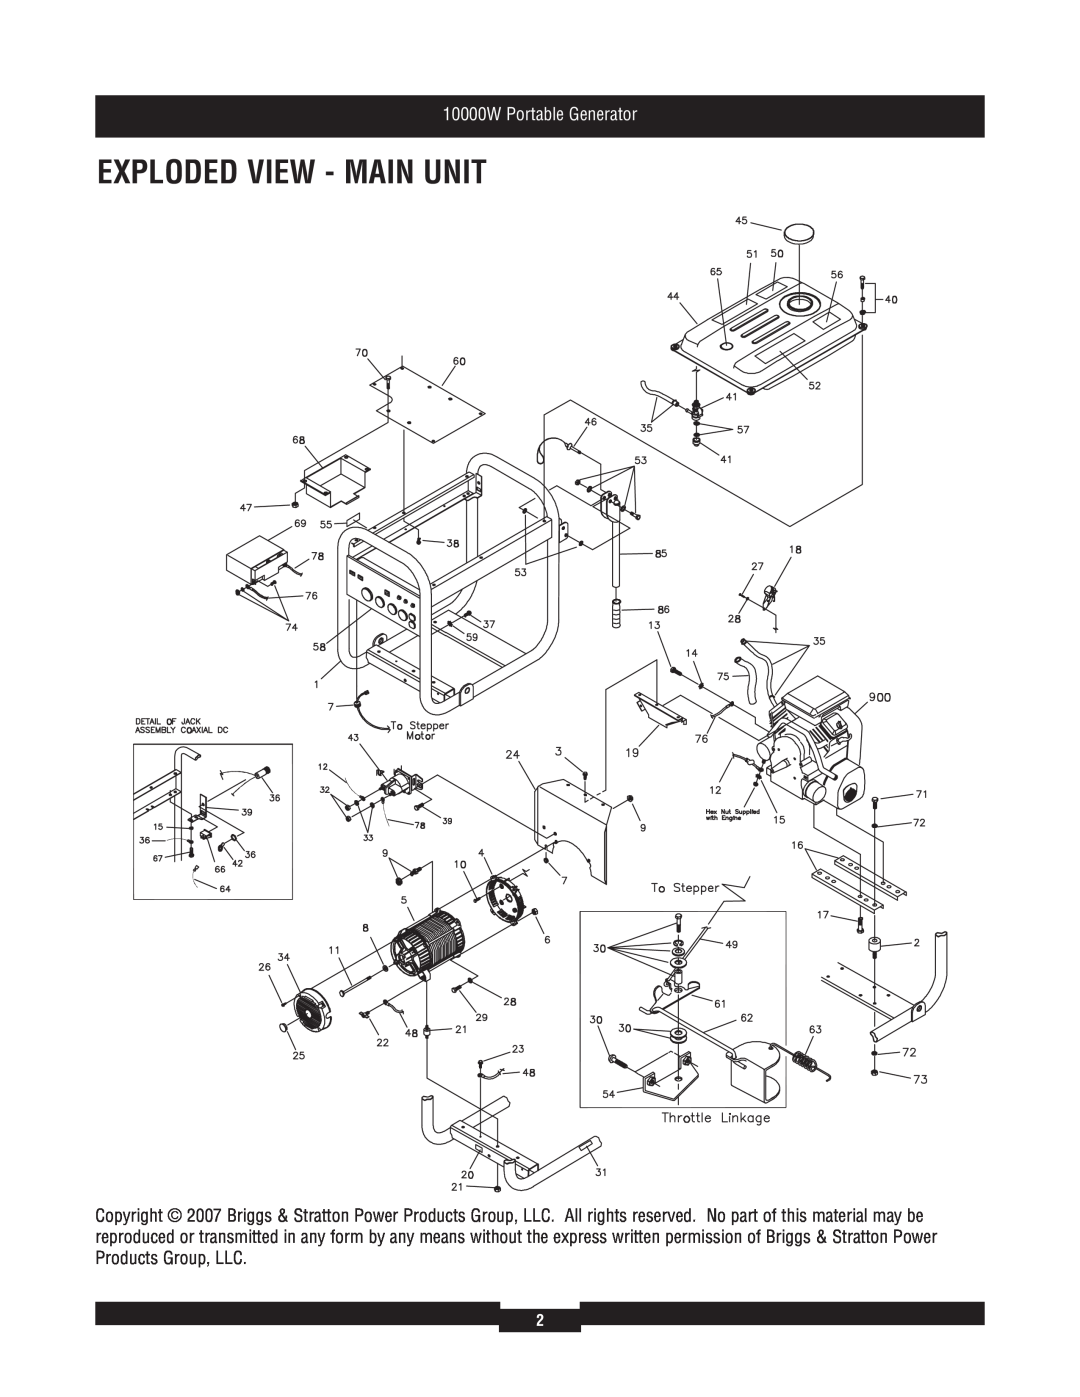 Briggs & Stratton 030384 manual Exploded View - Main Unit, 10000W Portable Generator 